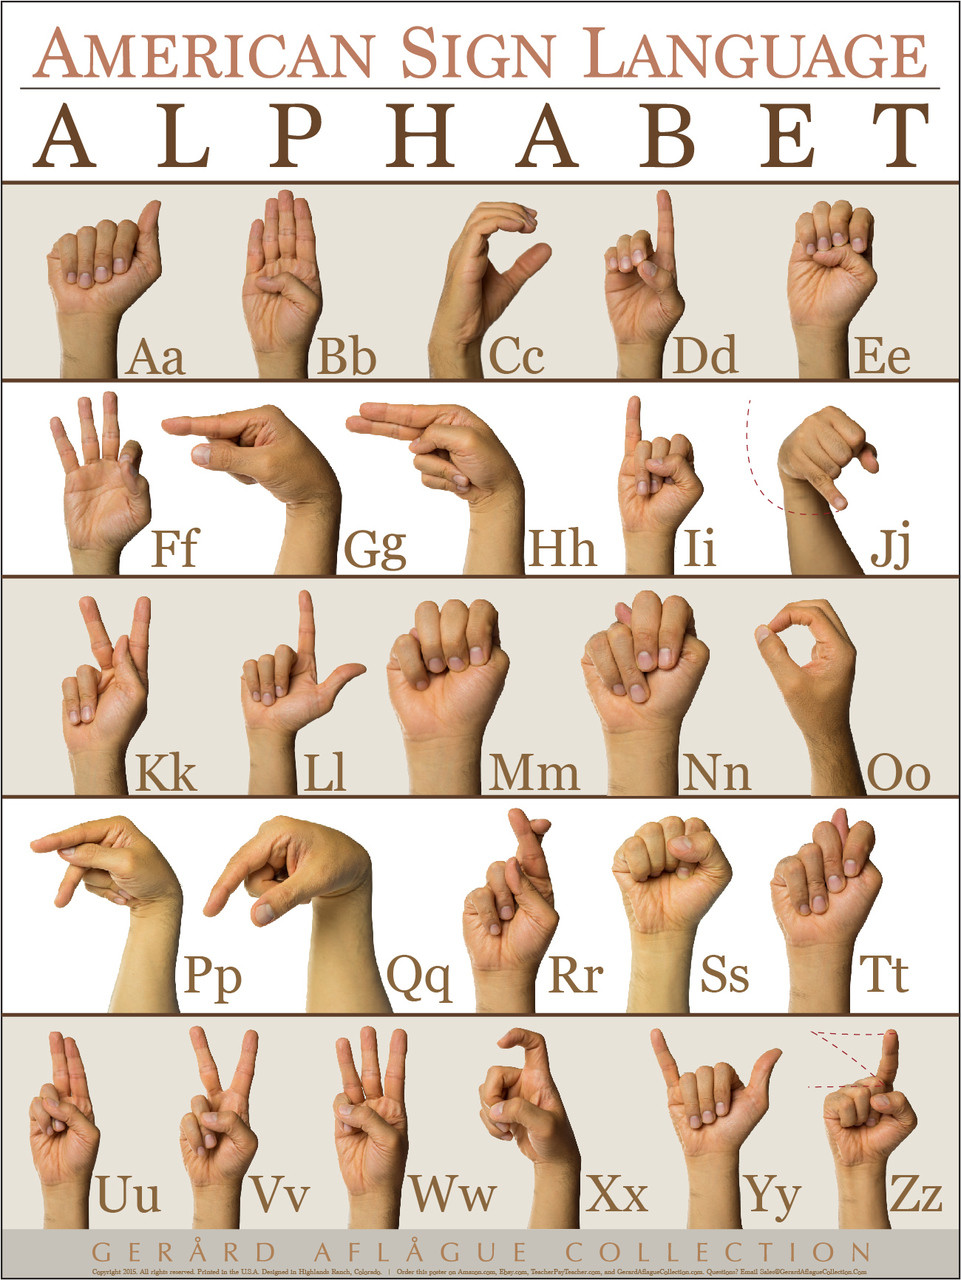 American Sign Language (ASL) Alphabet (ABC) Sticker Adhesive Poster - 18x24